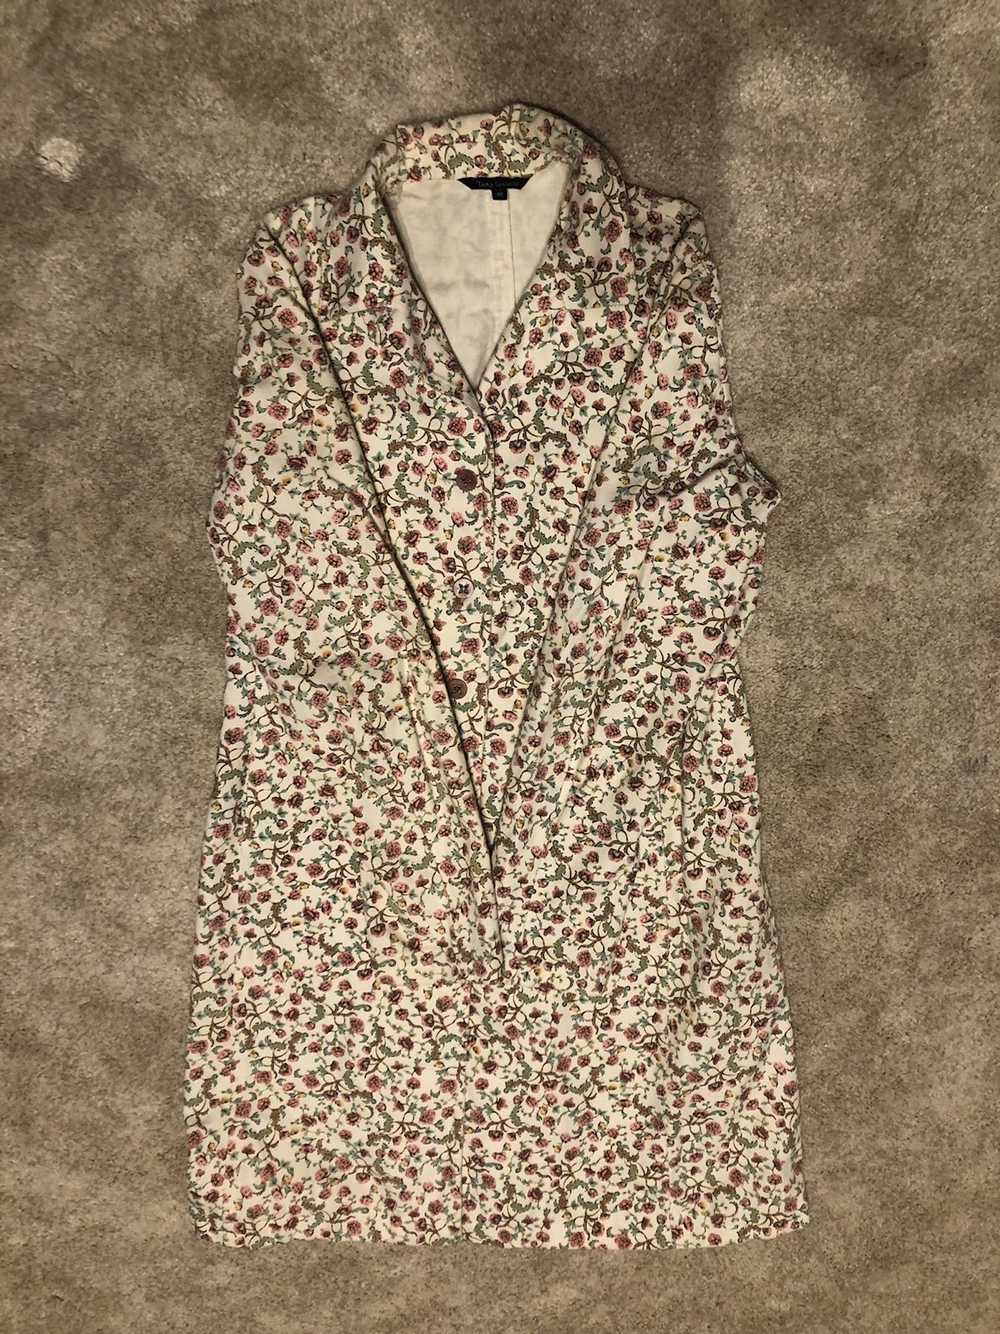 Tara Jarmon White Coat with red flowers - image 4